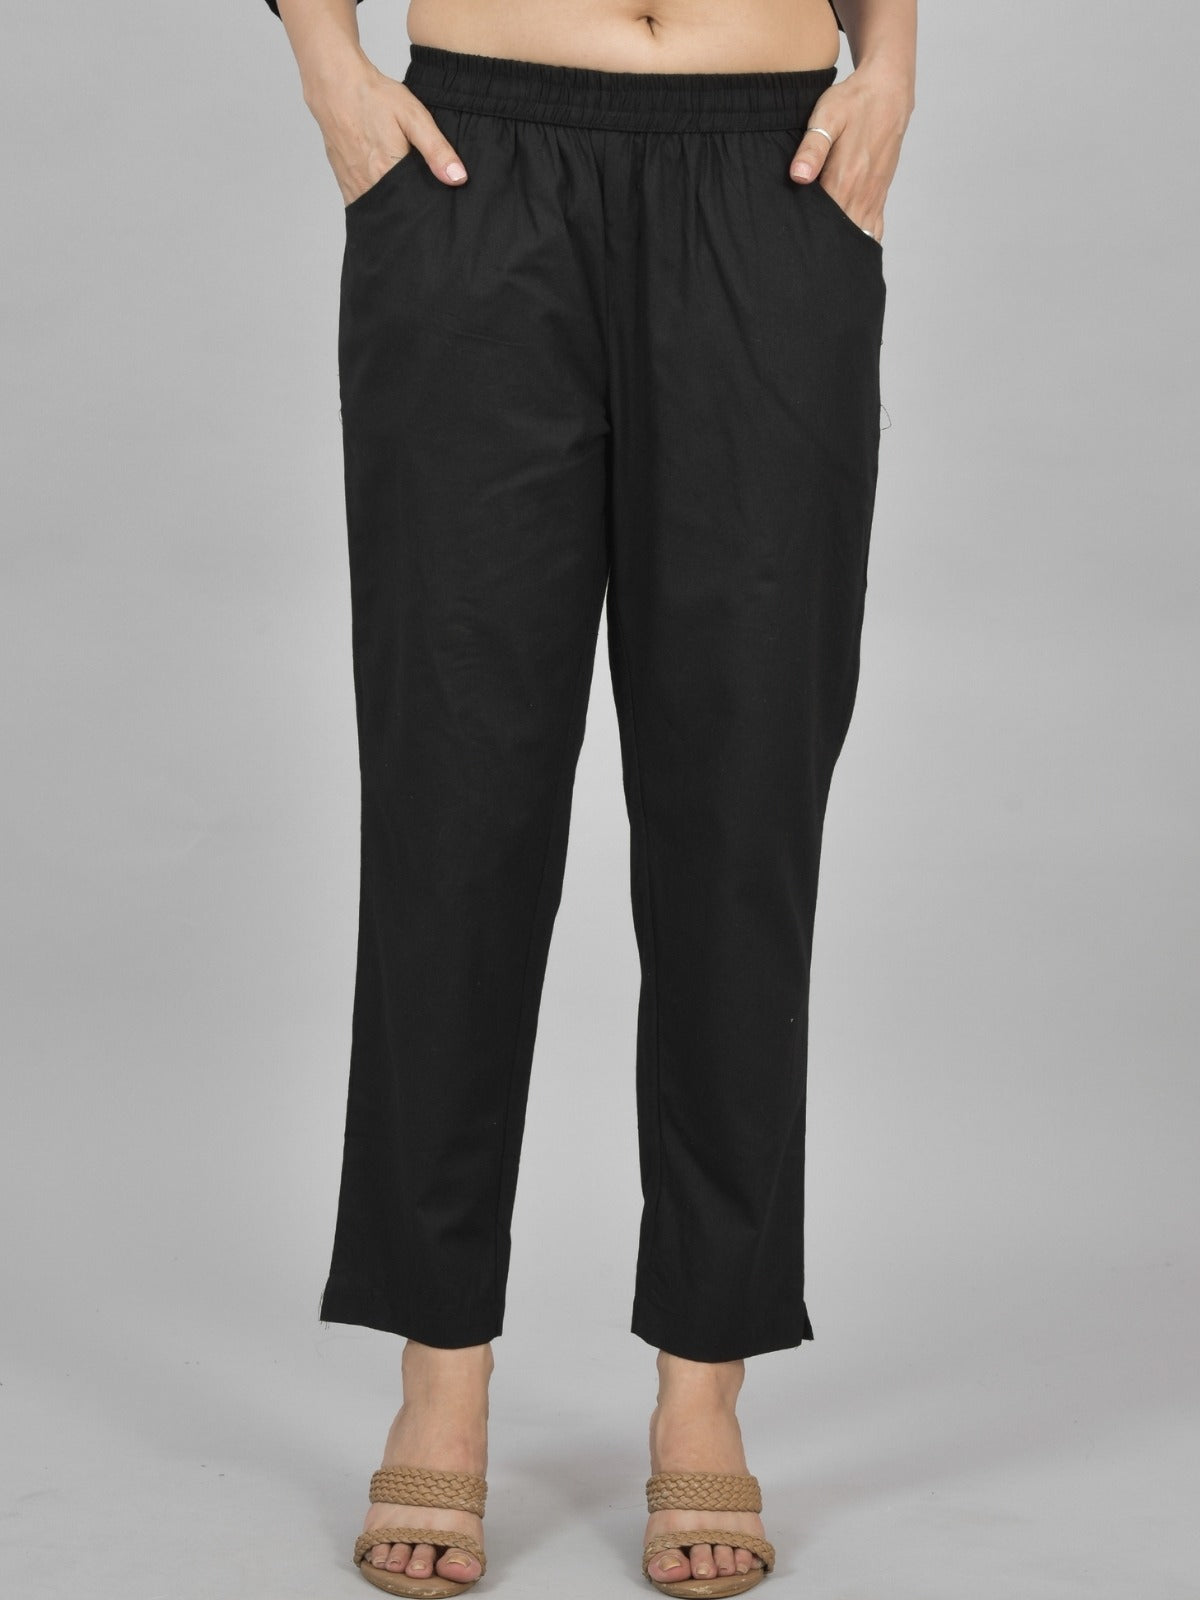 Quaclo Womens Solid Black Cotton Top-Pyjama Co-Ords Set